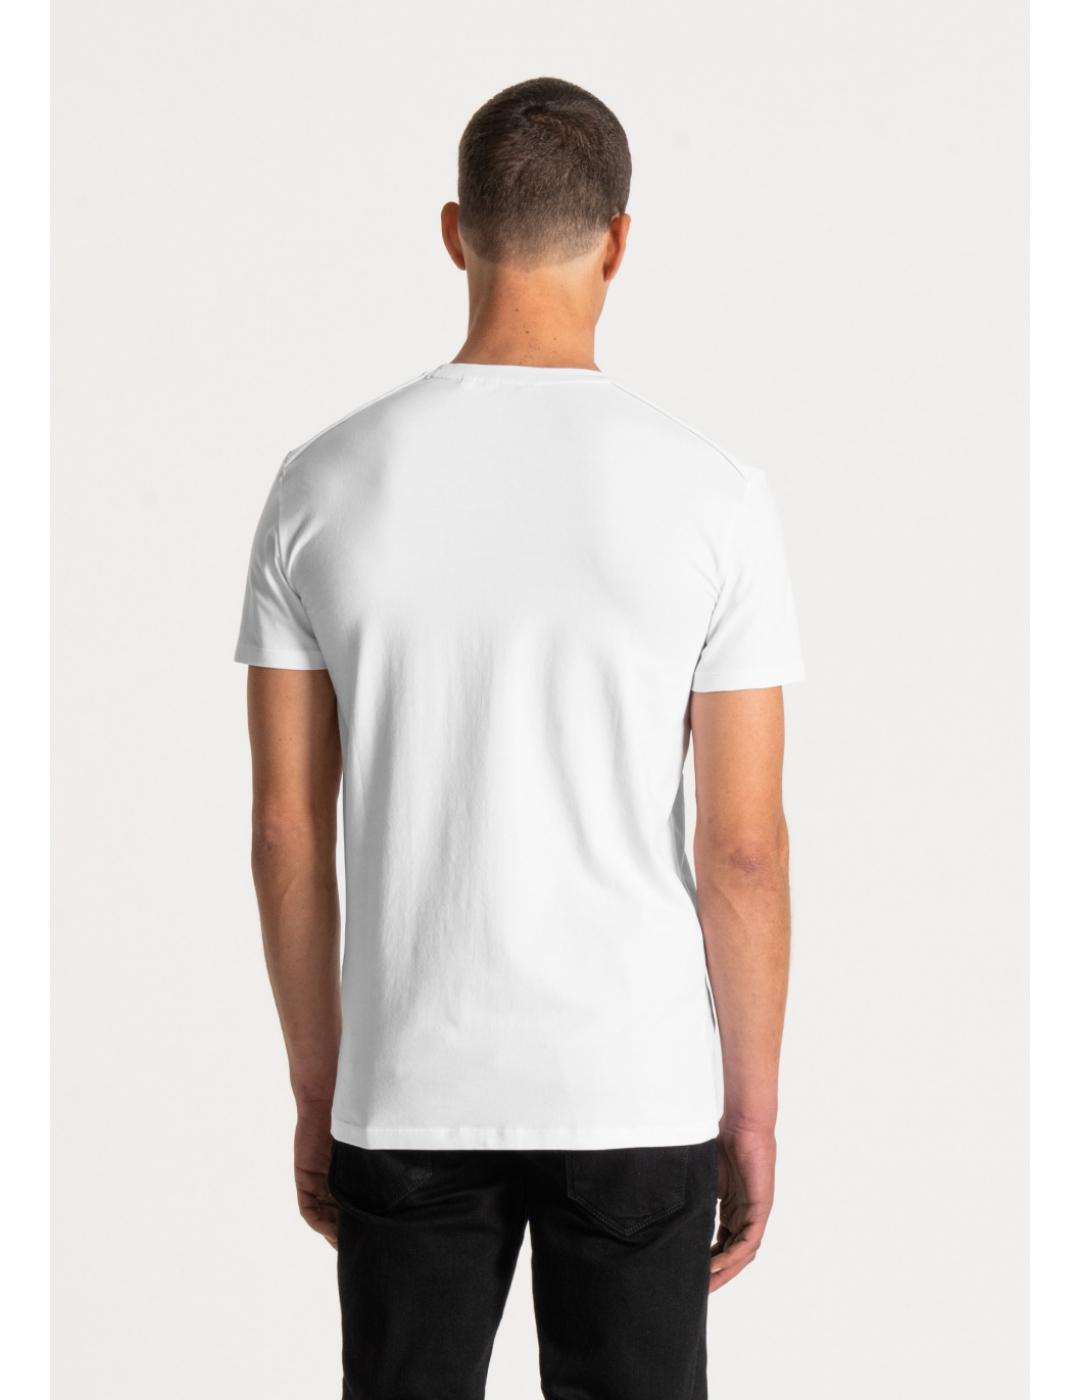 Camiseta Antony Morato basica blanca para hombre